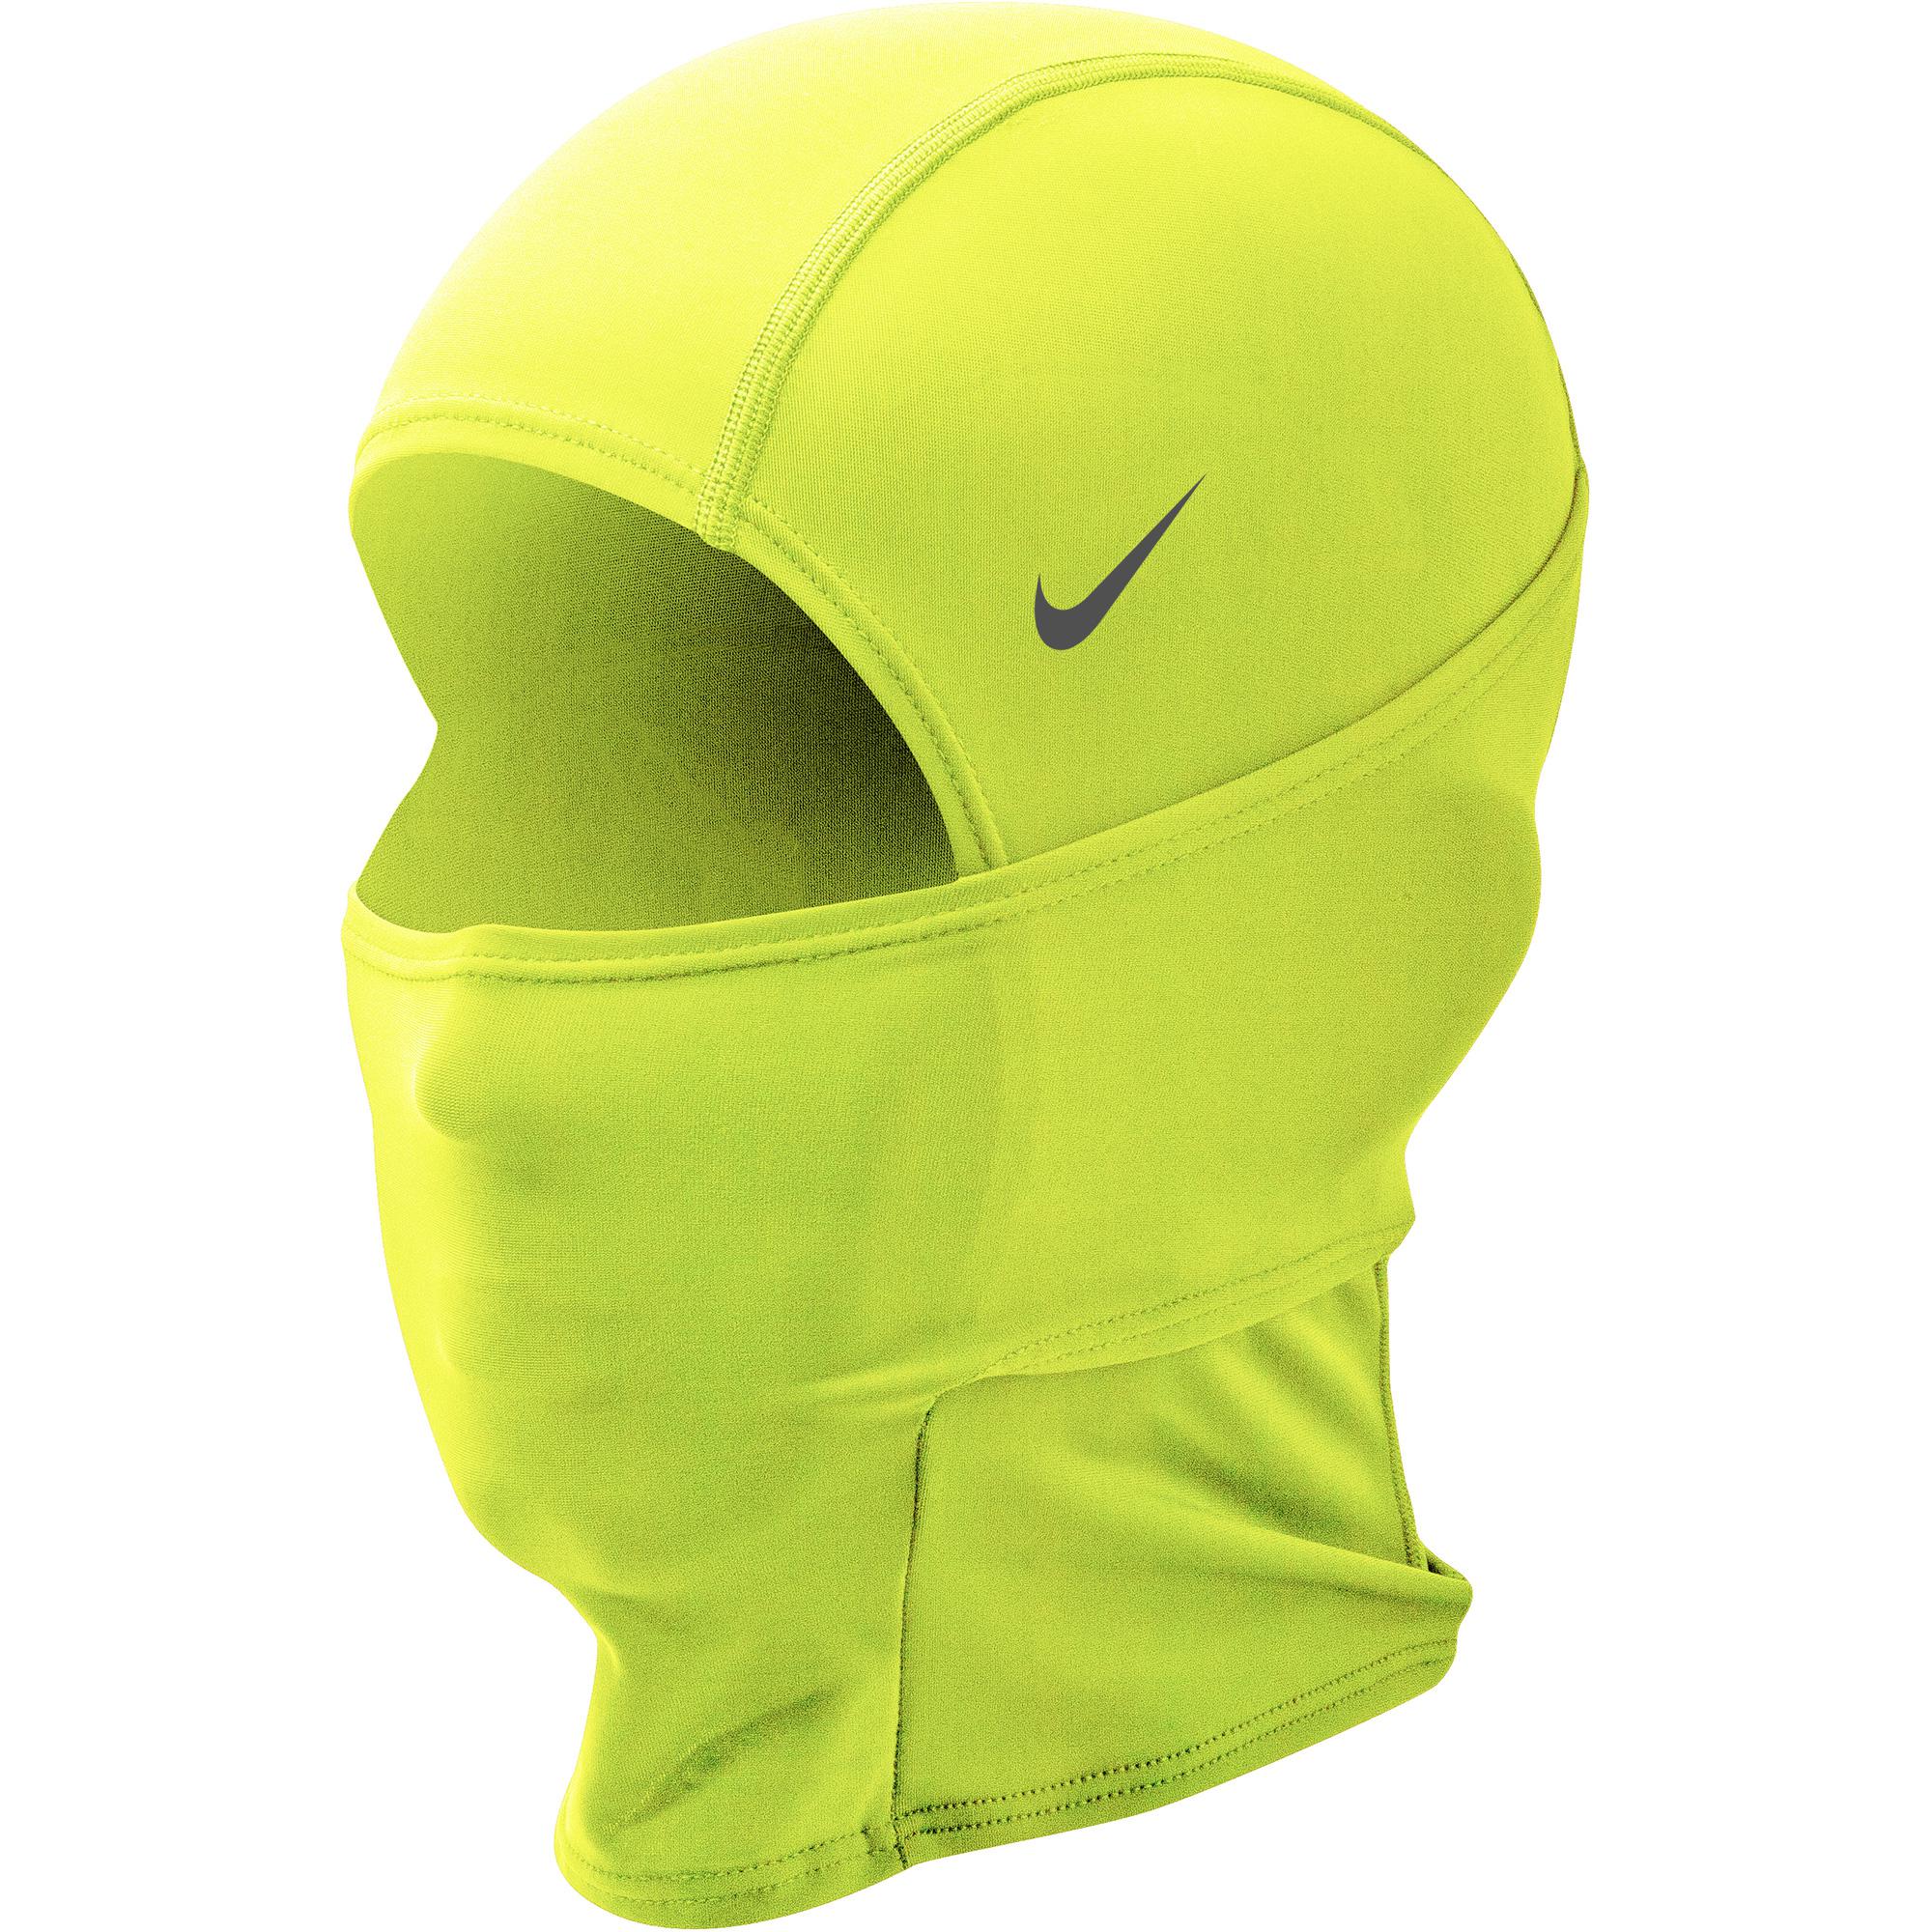 Solo haz Susceptibles a Lavandería a monedas Nike Pro Combat Hyperwarm Hydropull Hood - Volt - Tennisnuts.com